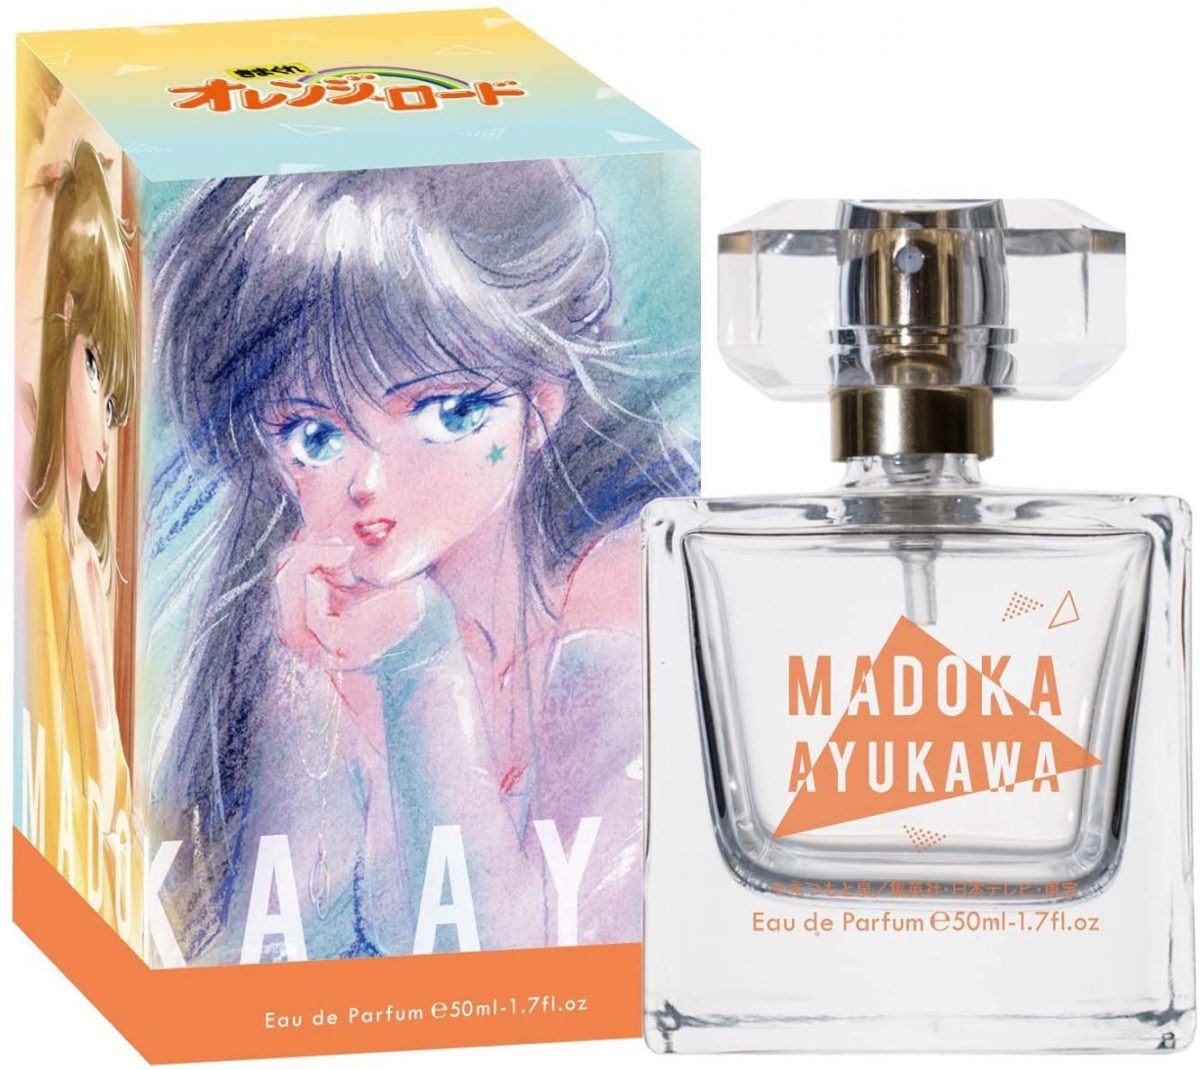 The Official Madoka Ayukawa Perfume Looks Great